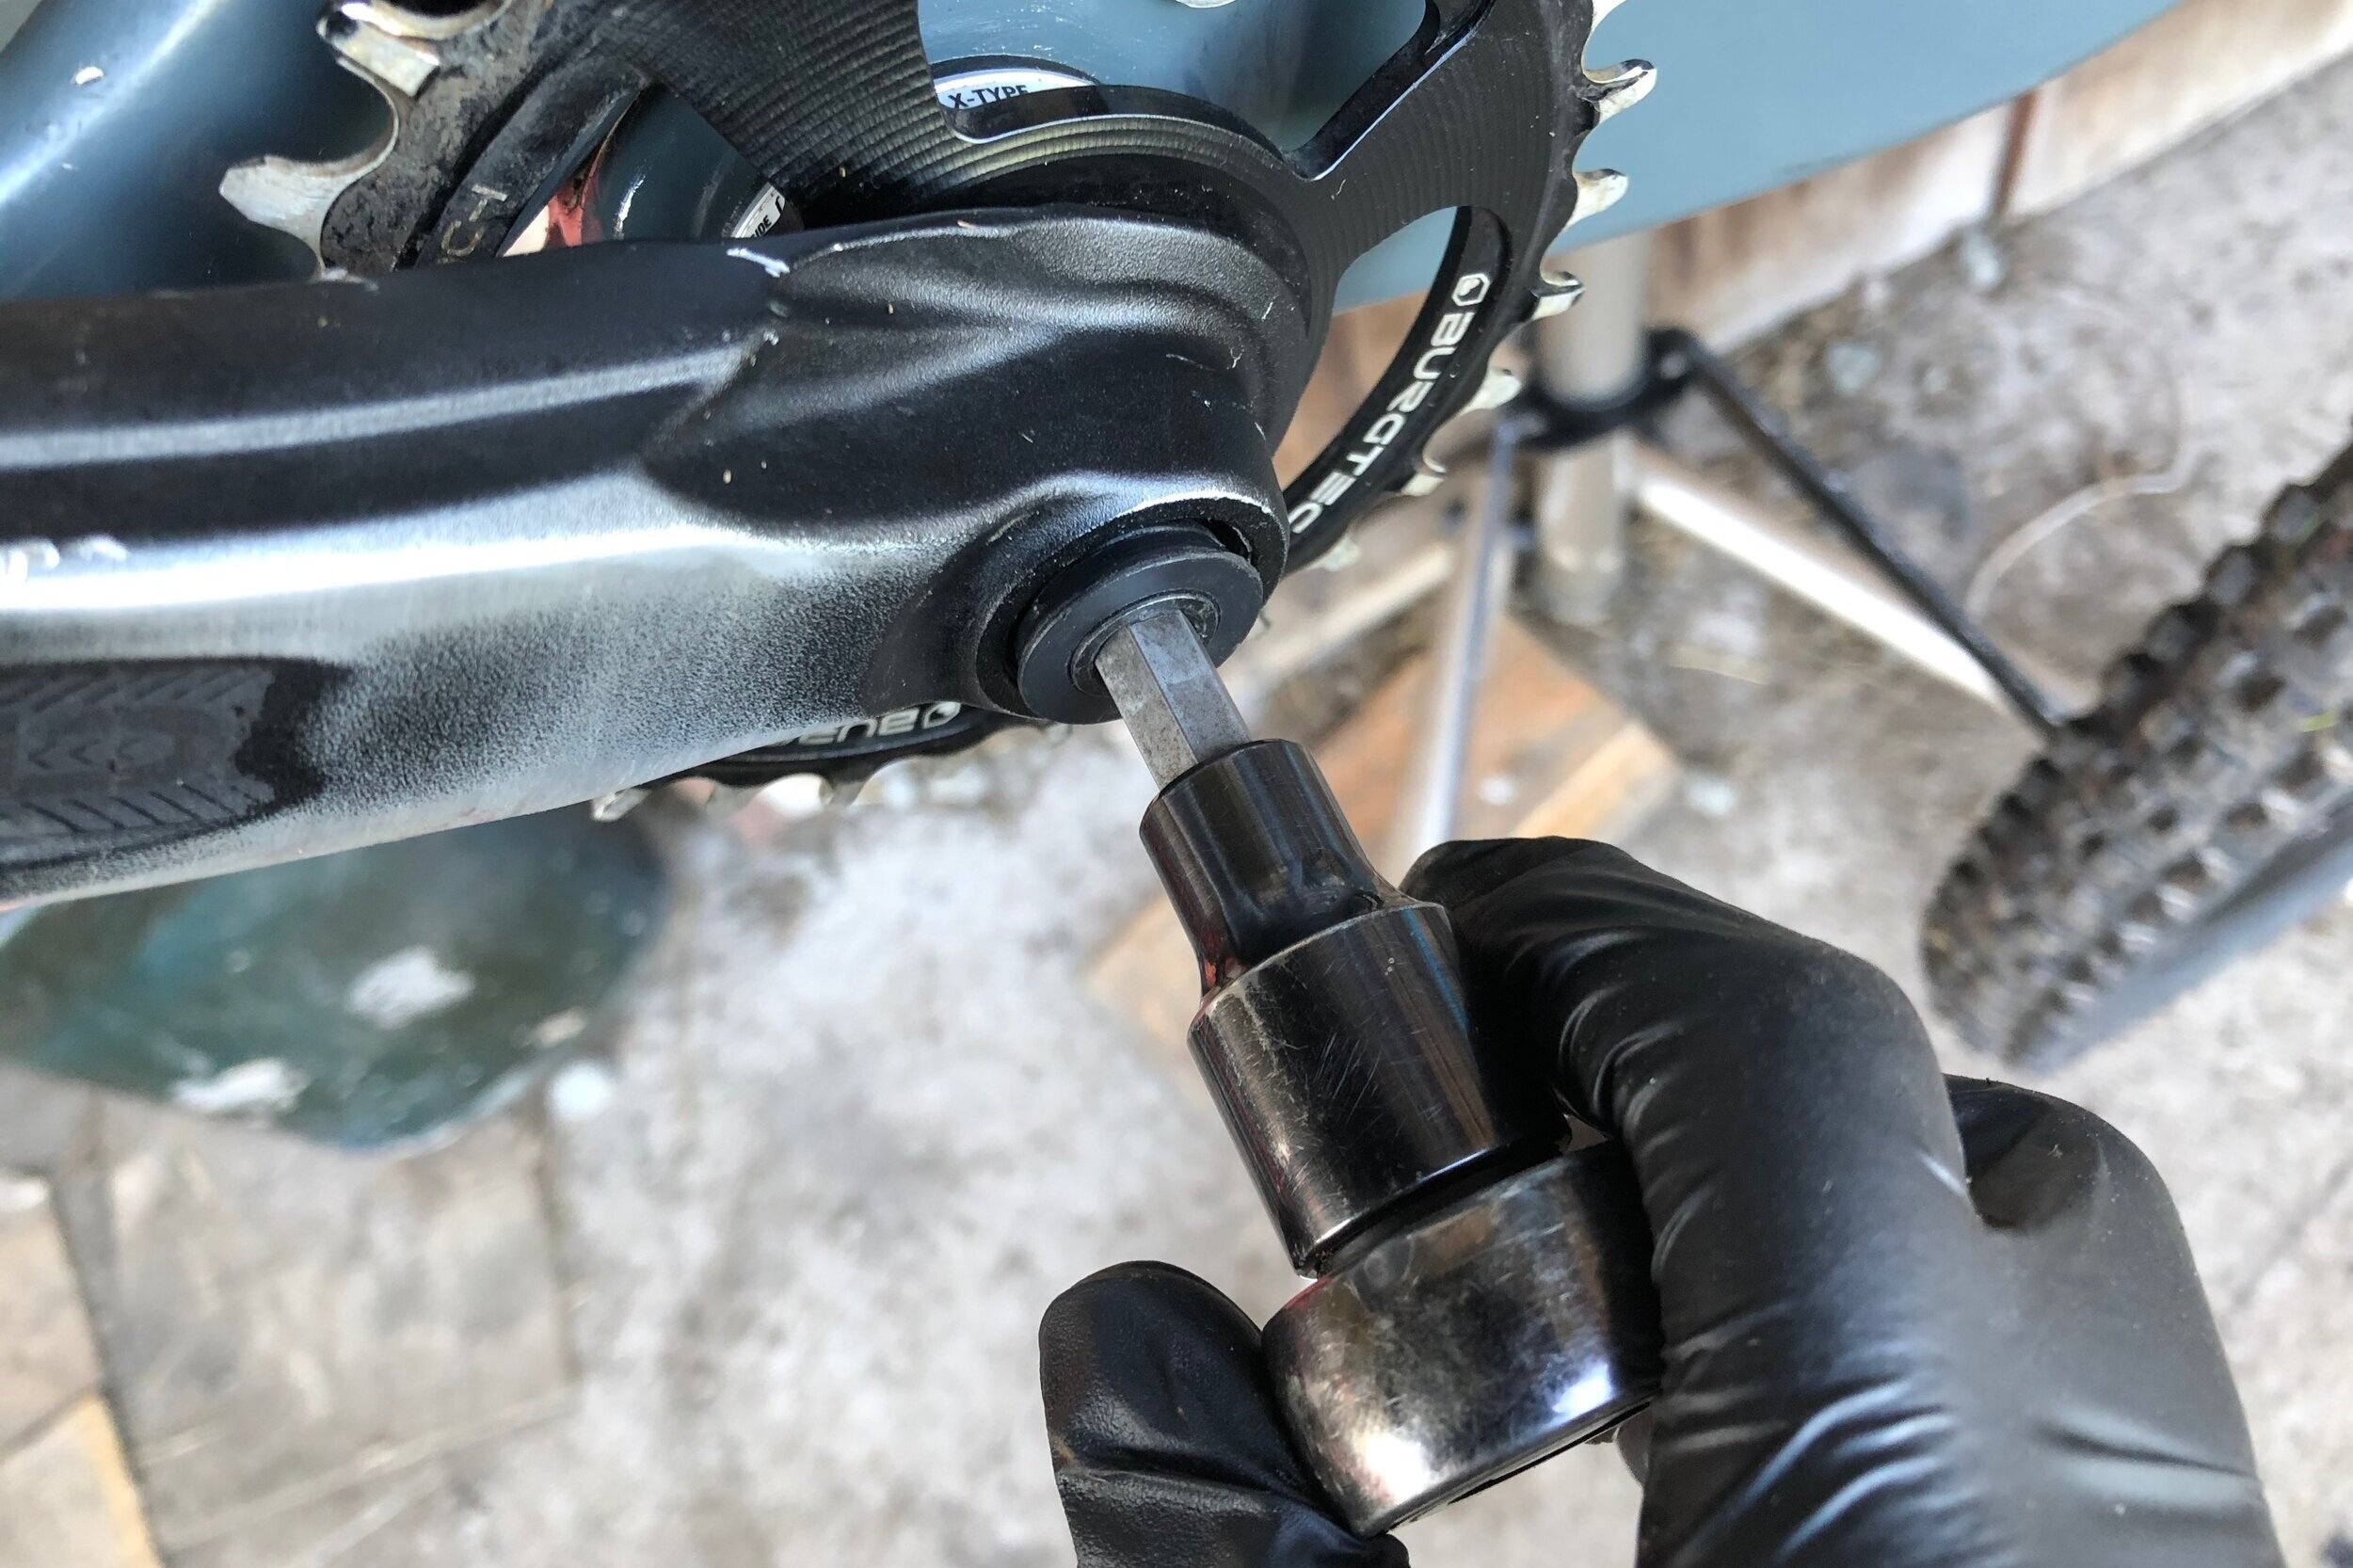 Black Bike Bicycle Crankset Crank Arm Puller Remover Removal Repair Tool To G8N2 